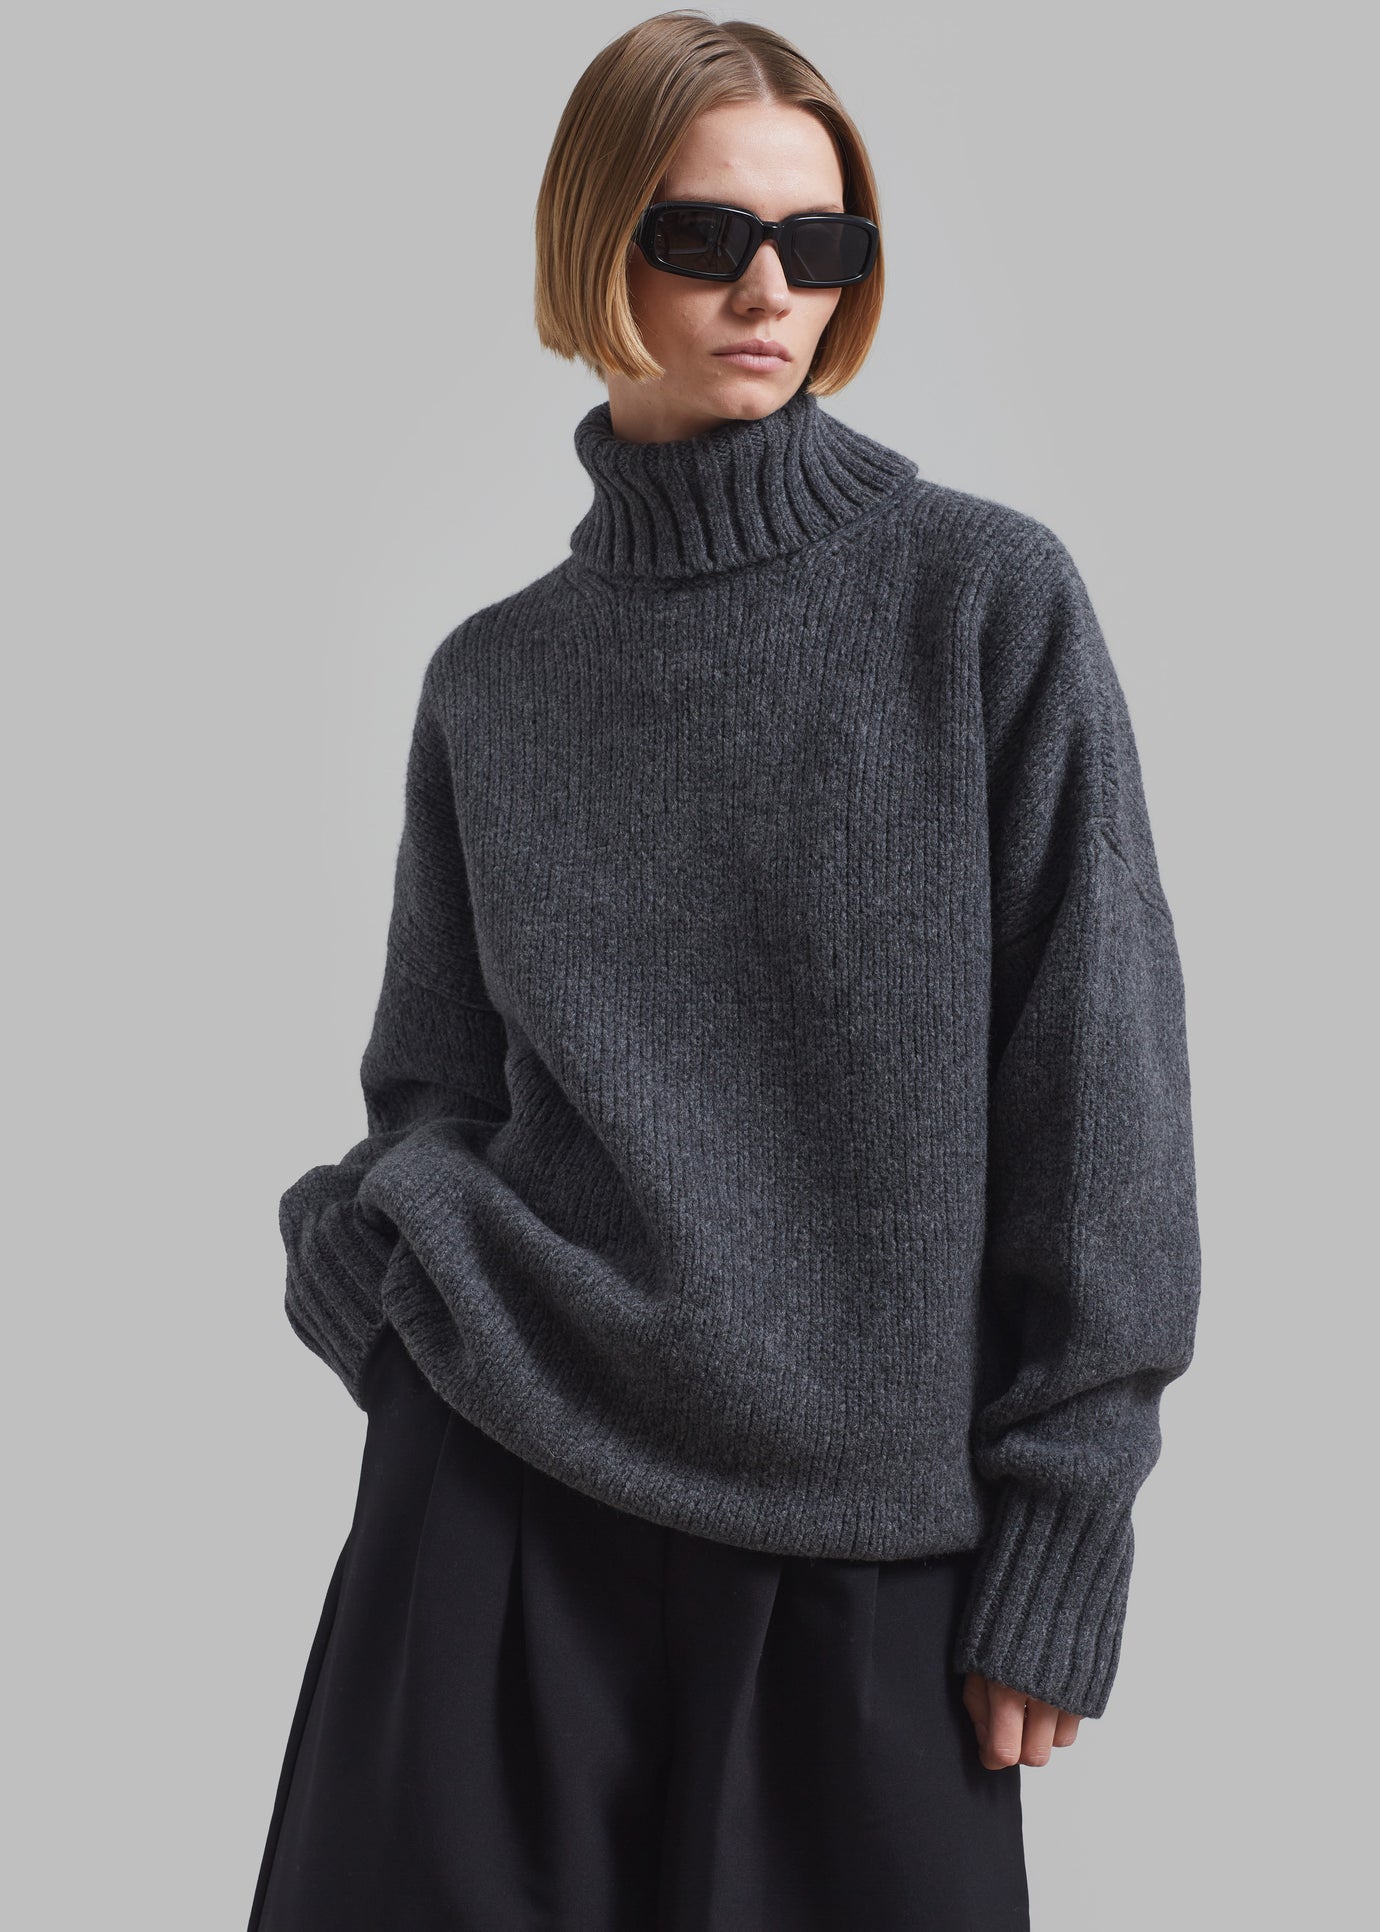 Sportmax Premier Knitted Sweater Dress - Dark Grey